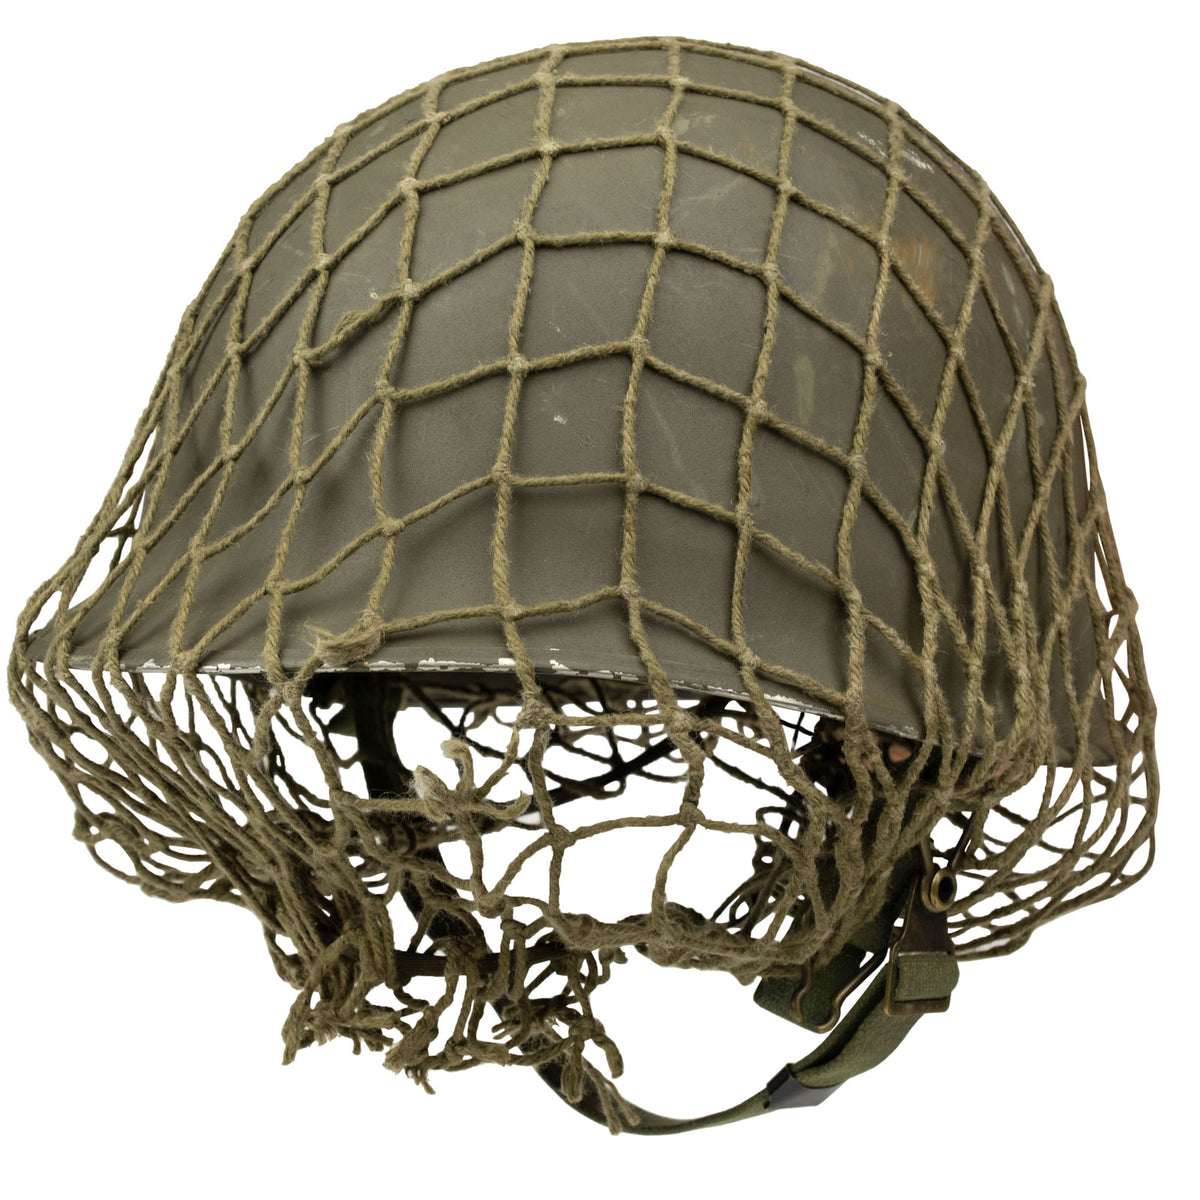 Austrian Army Helmet Netting